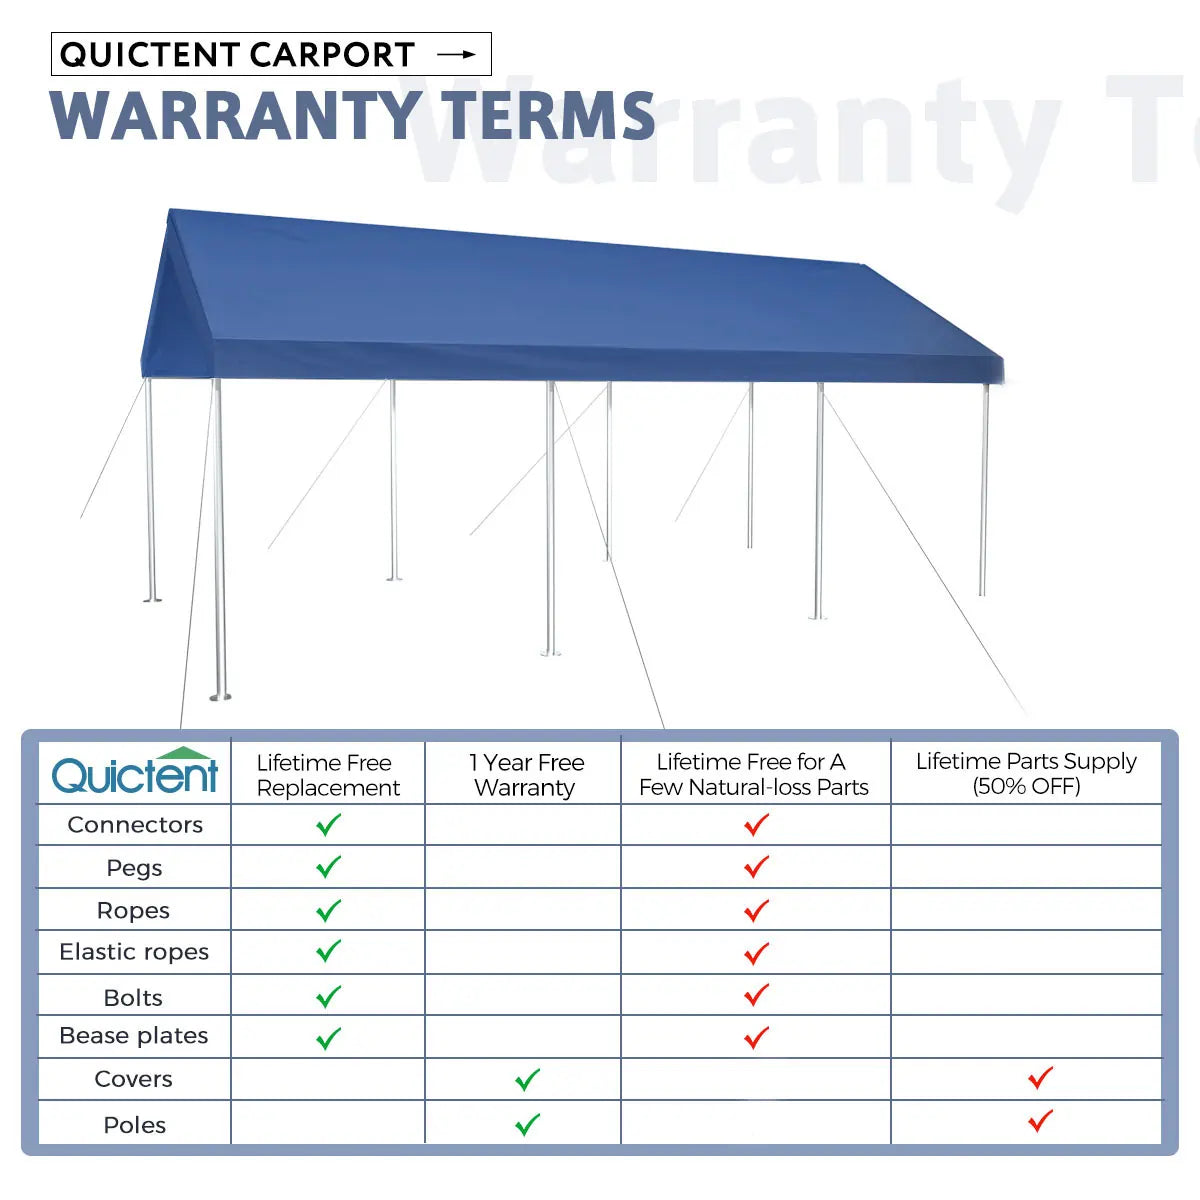 warranty terms for blue carport#color_blue